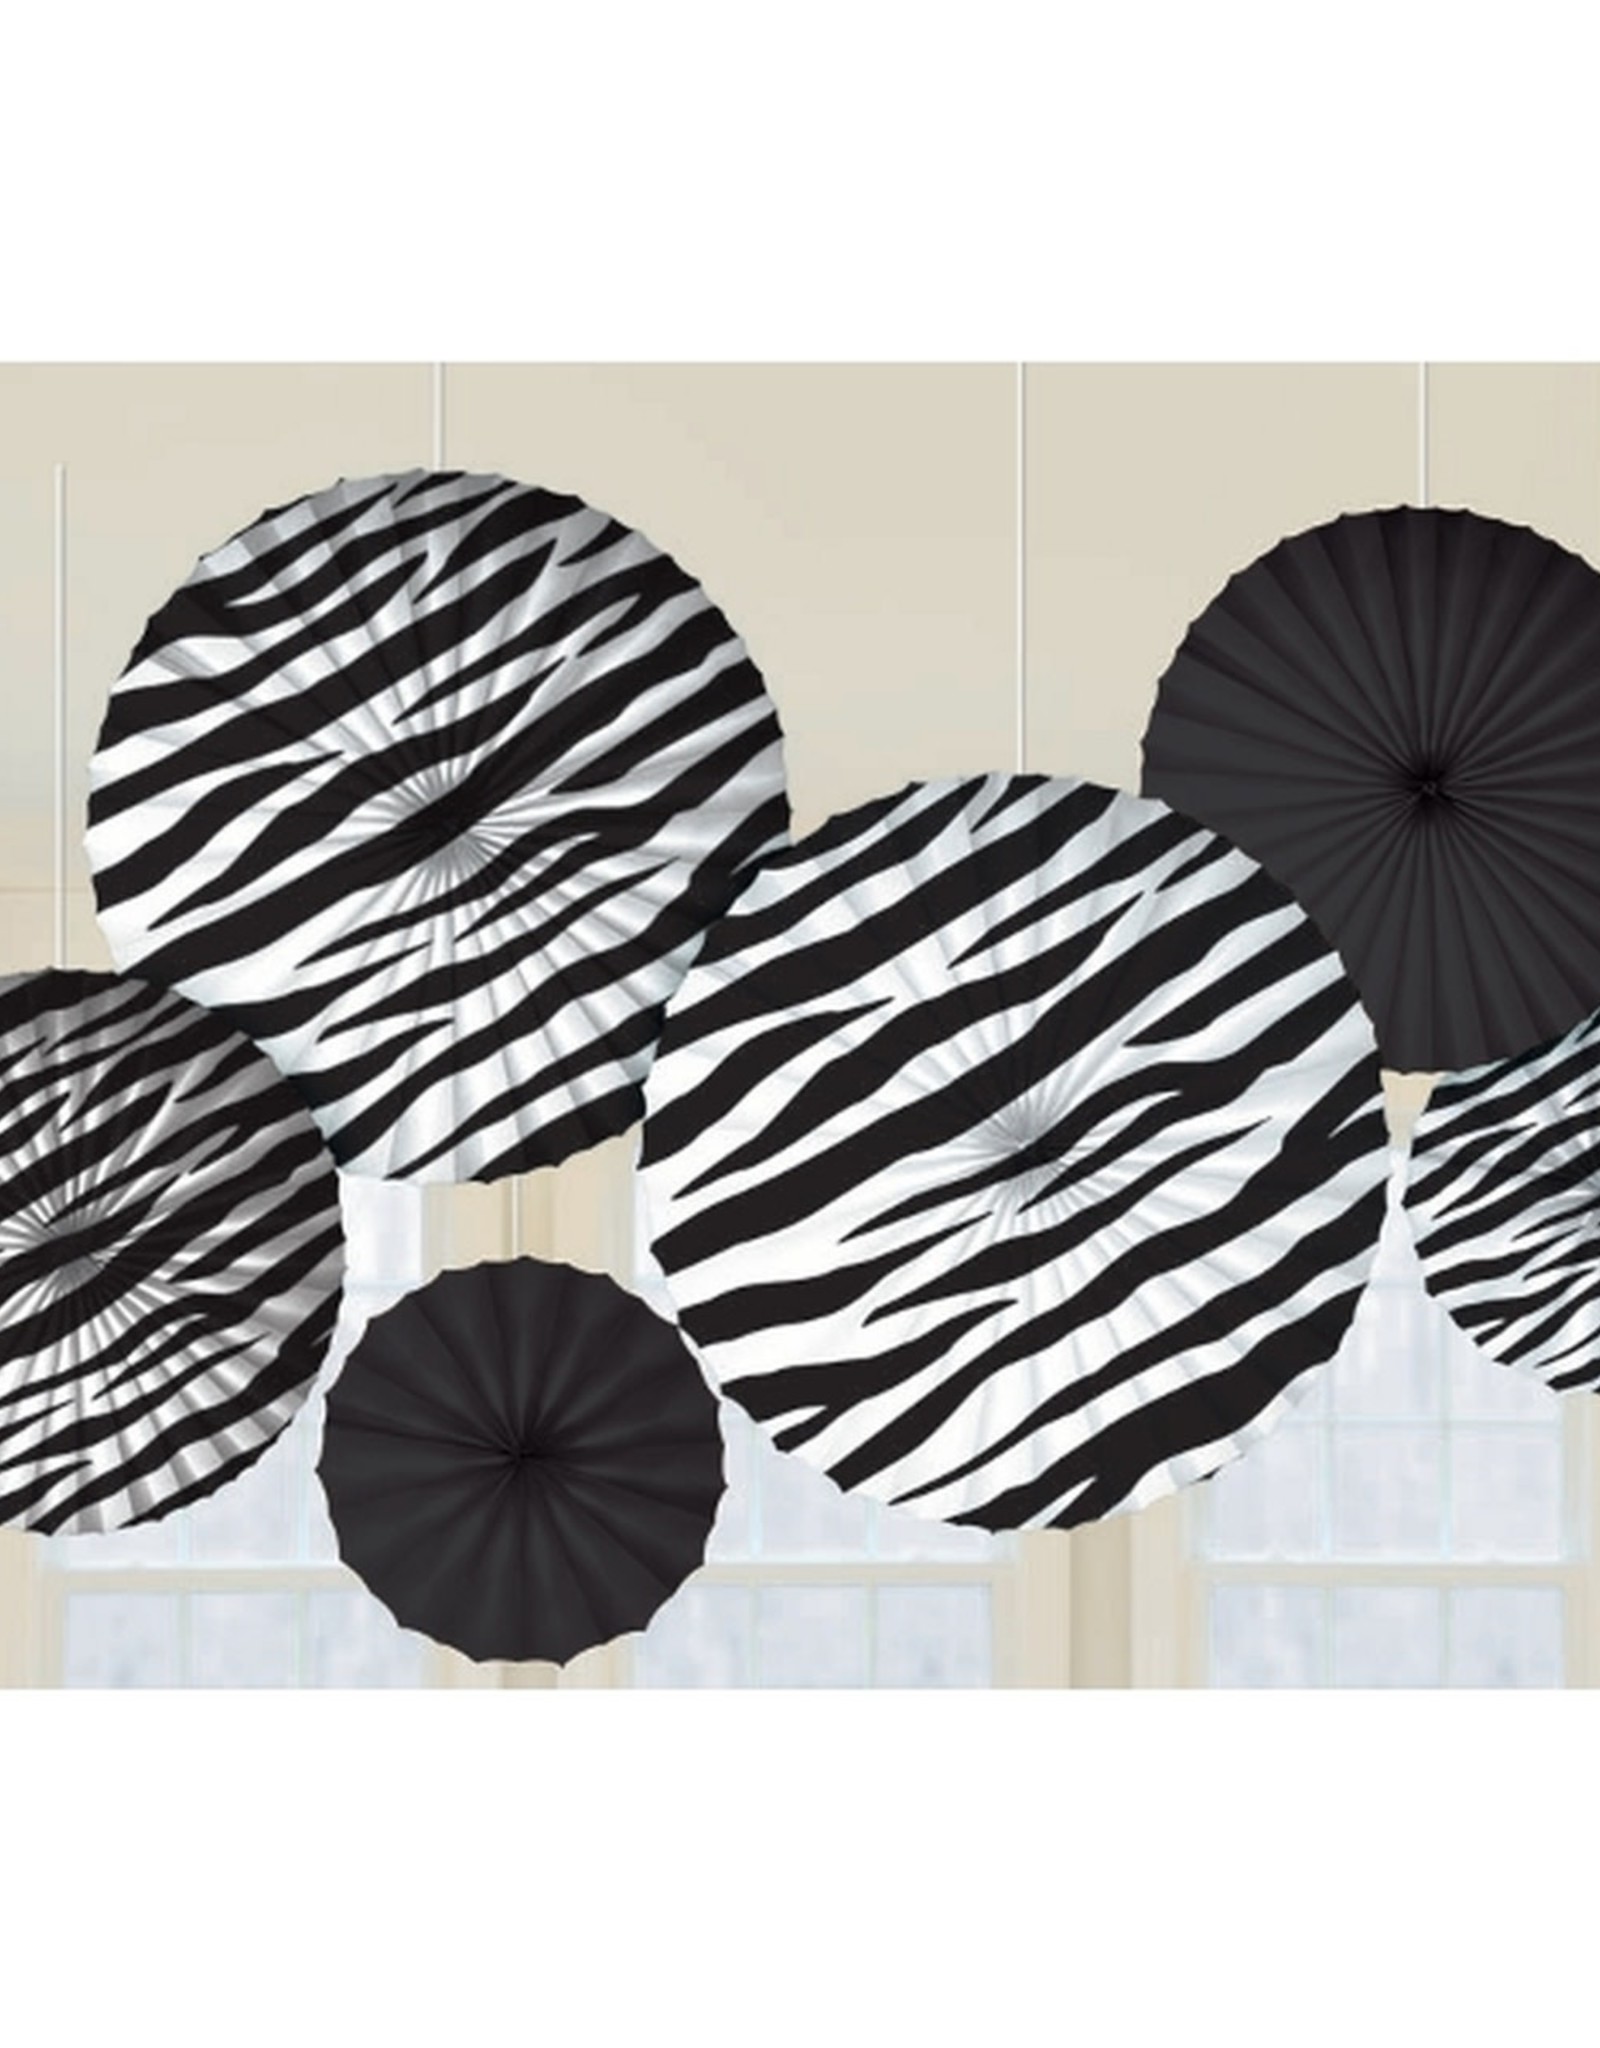 Wallys party factory Zebra Printed Paper Fan Decorations, 6pk